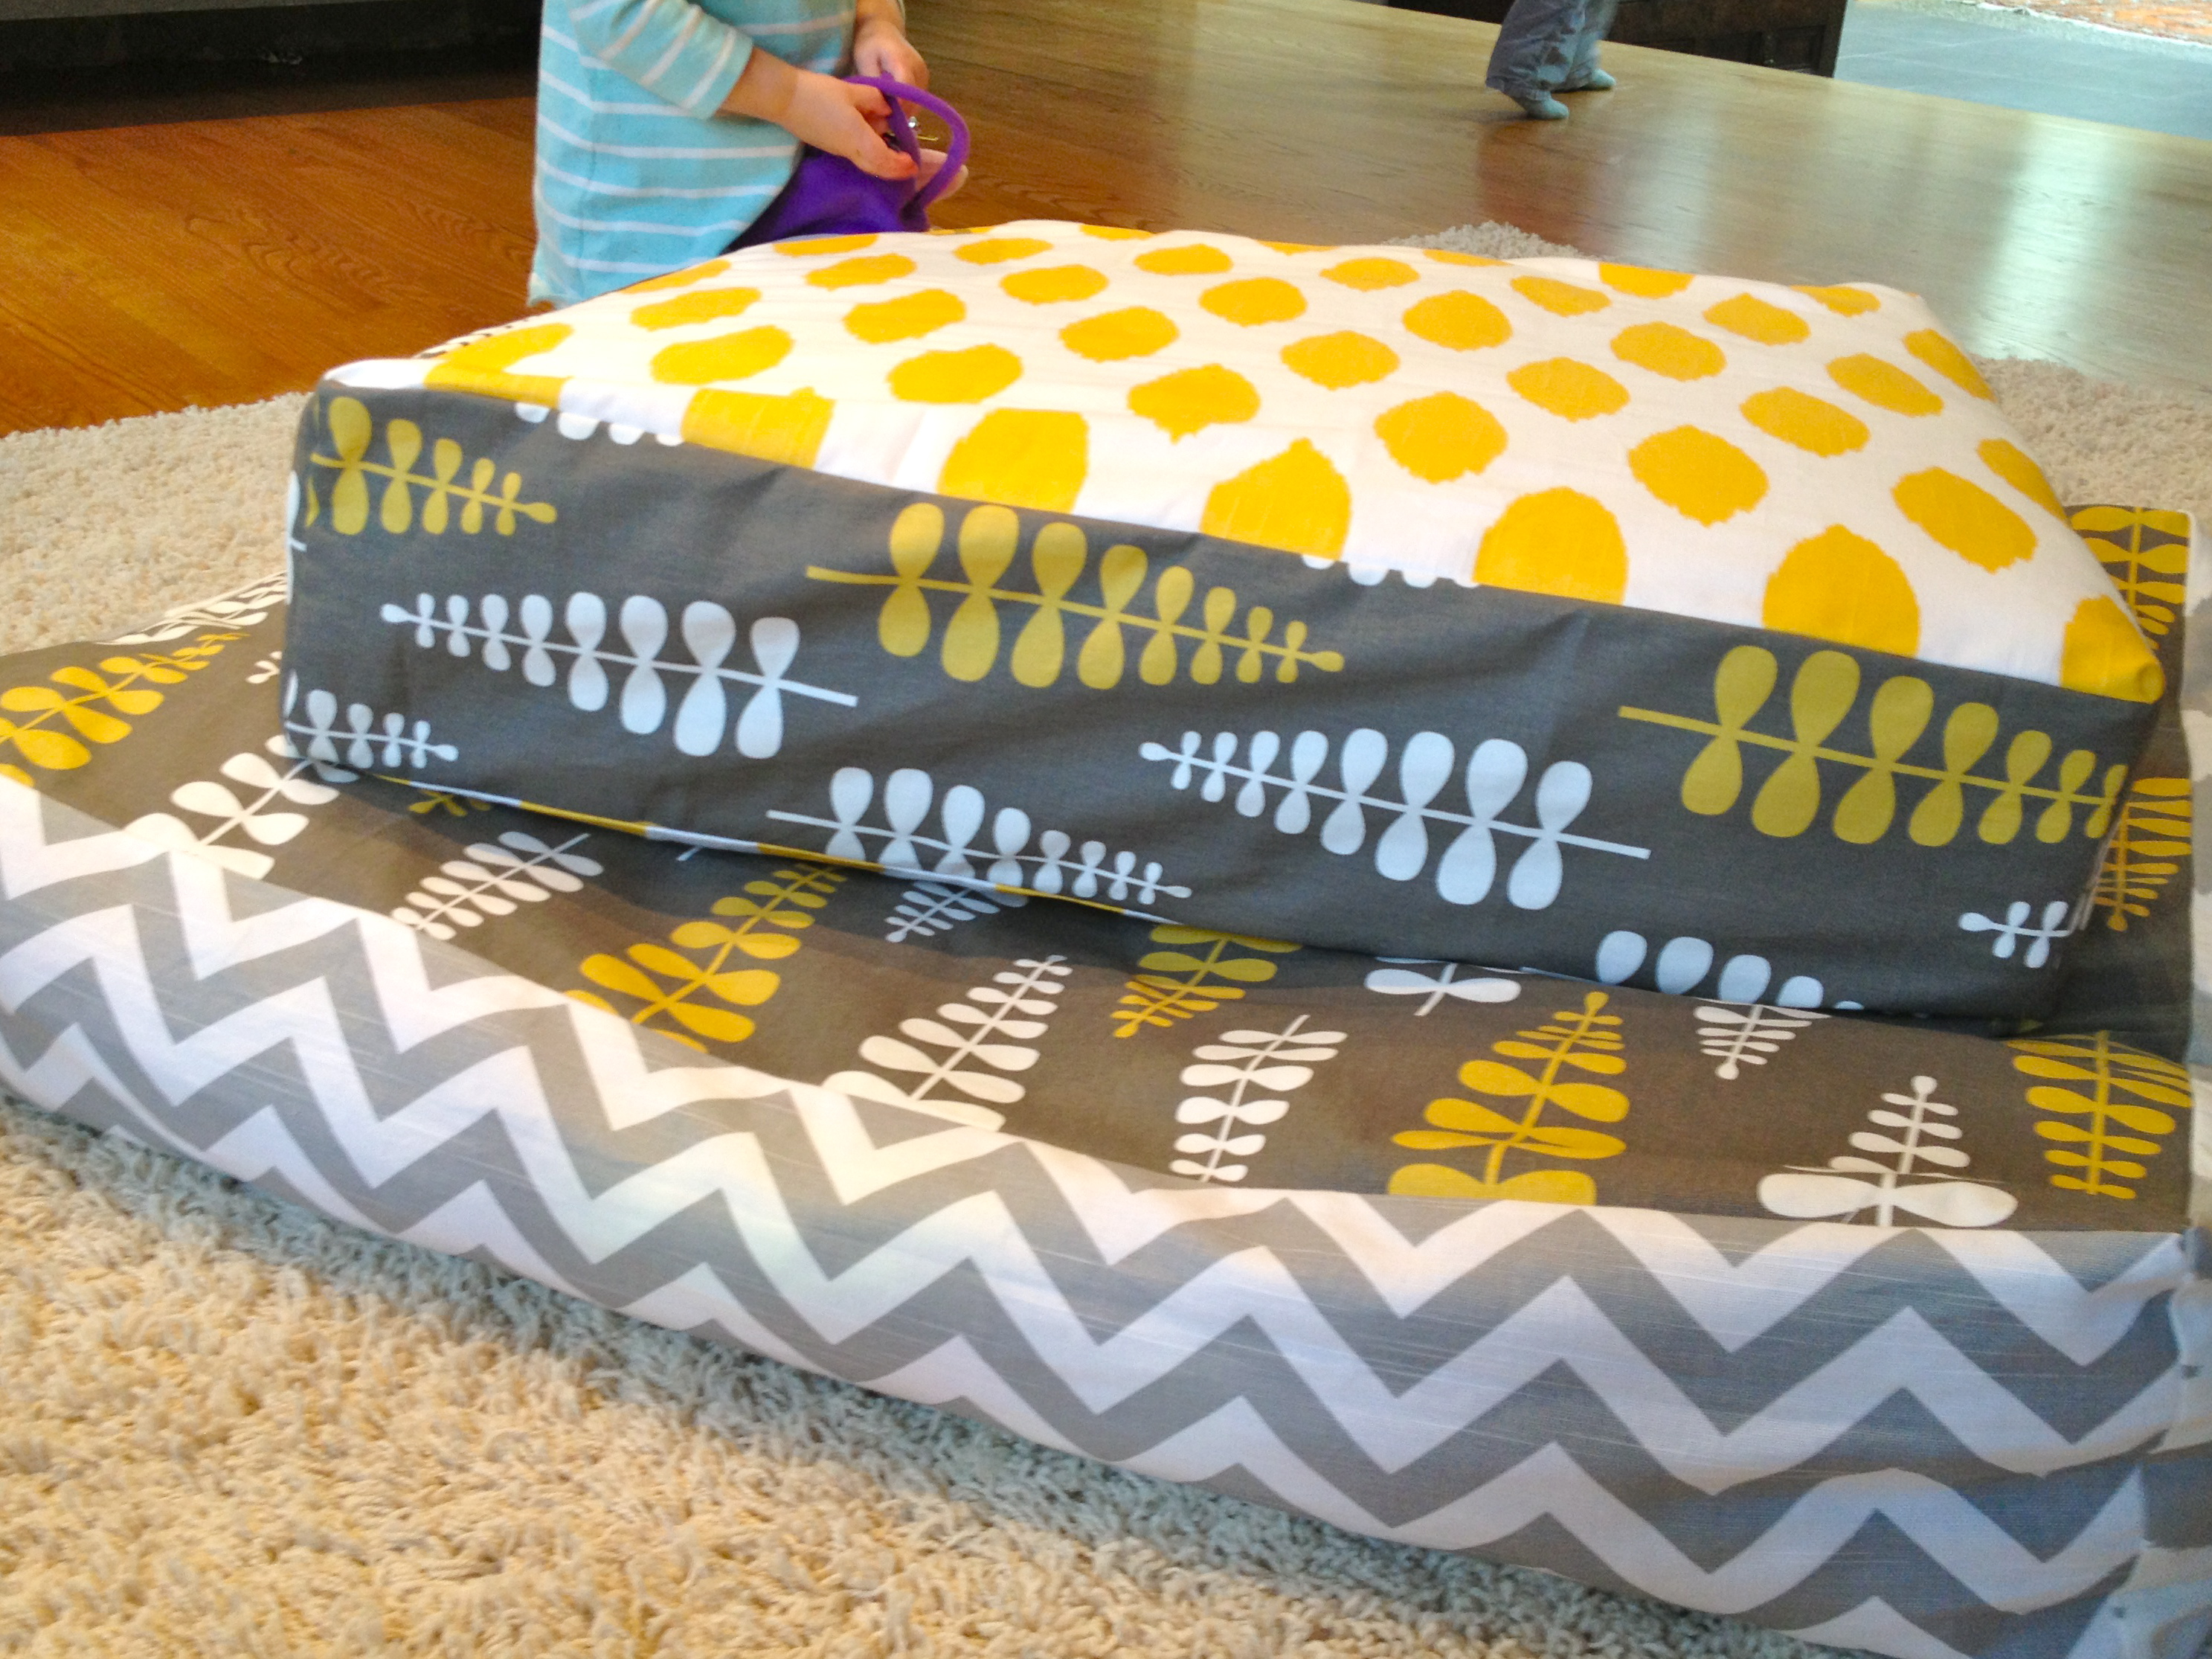 Large Kids Floor Cushions